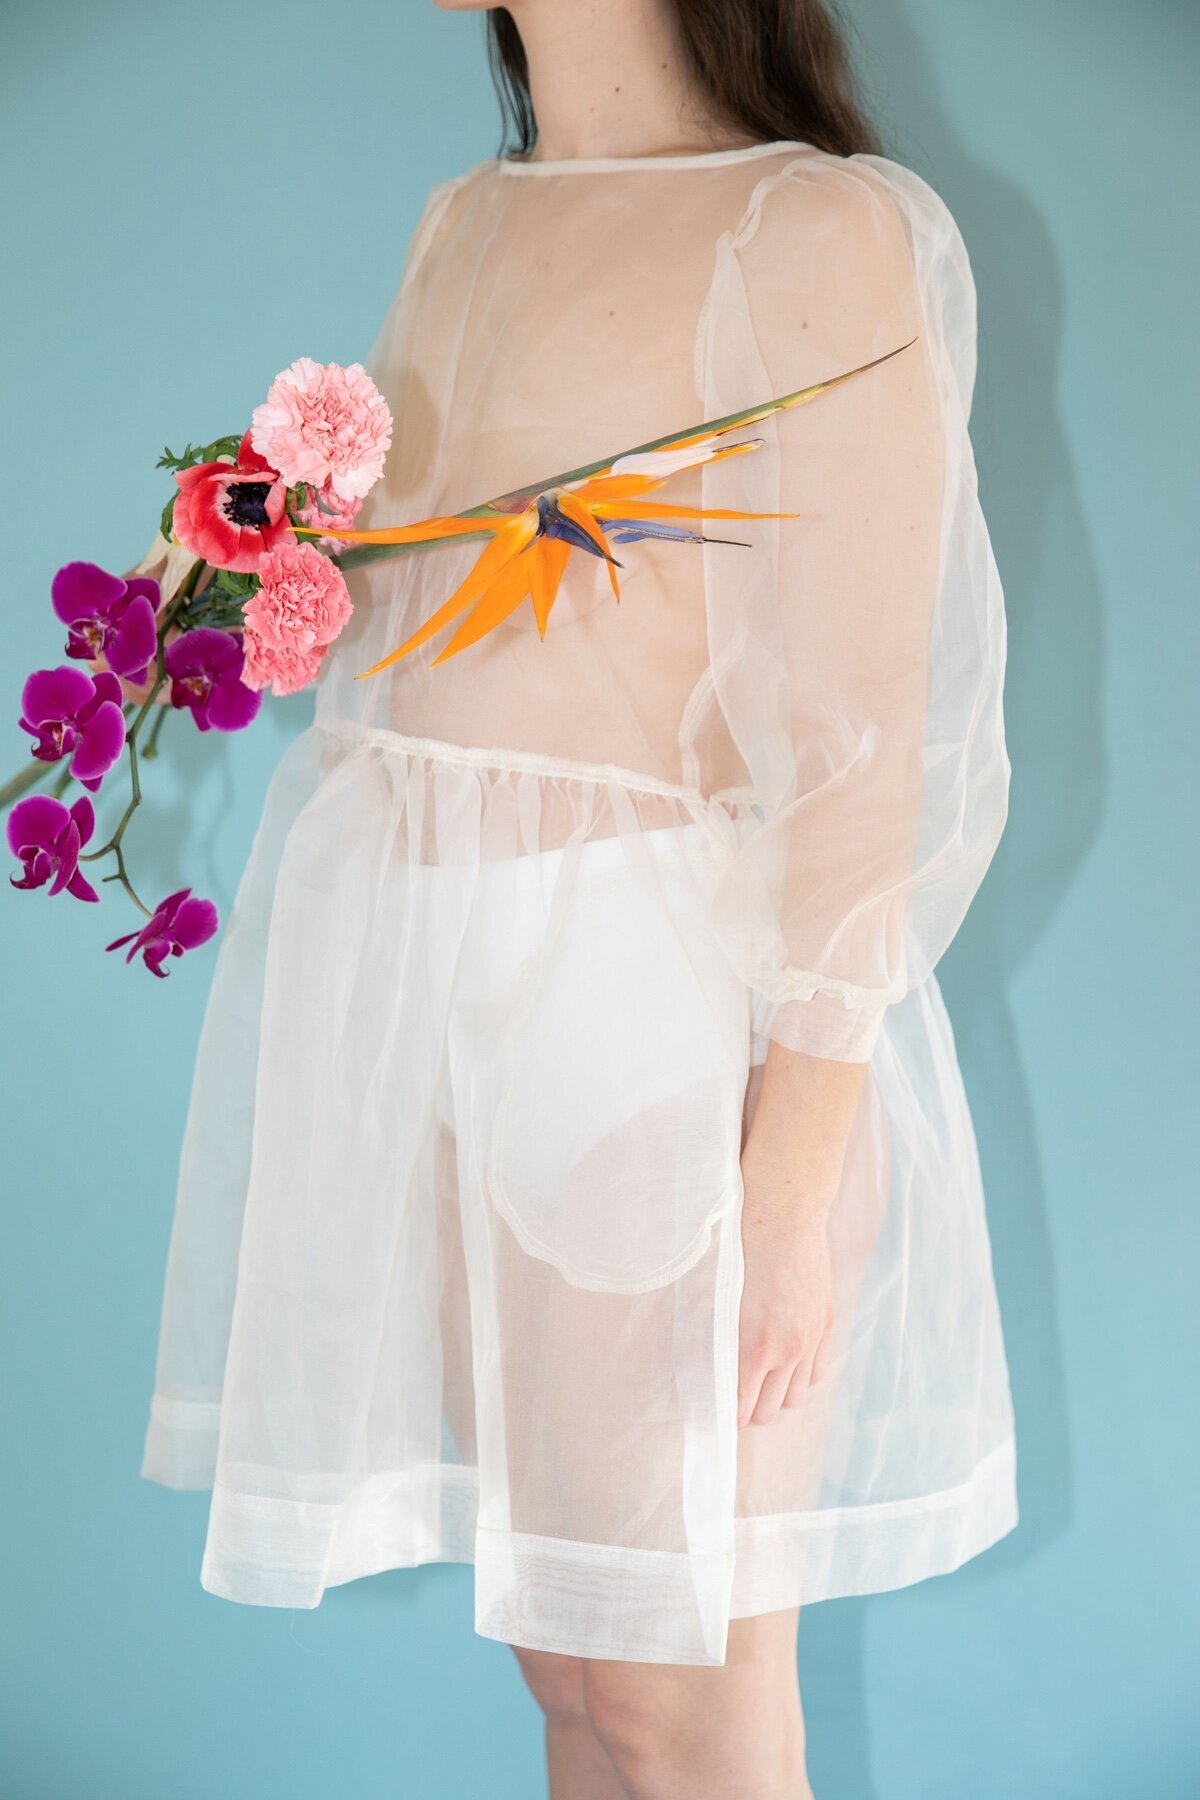 Image of model in organza dress